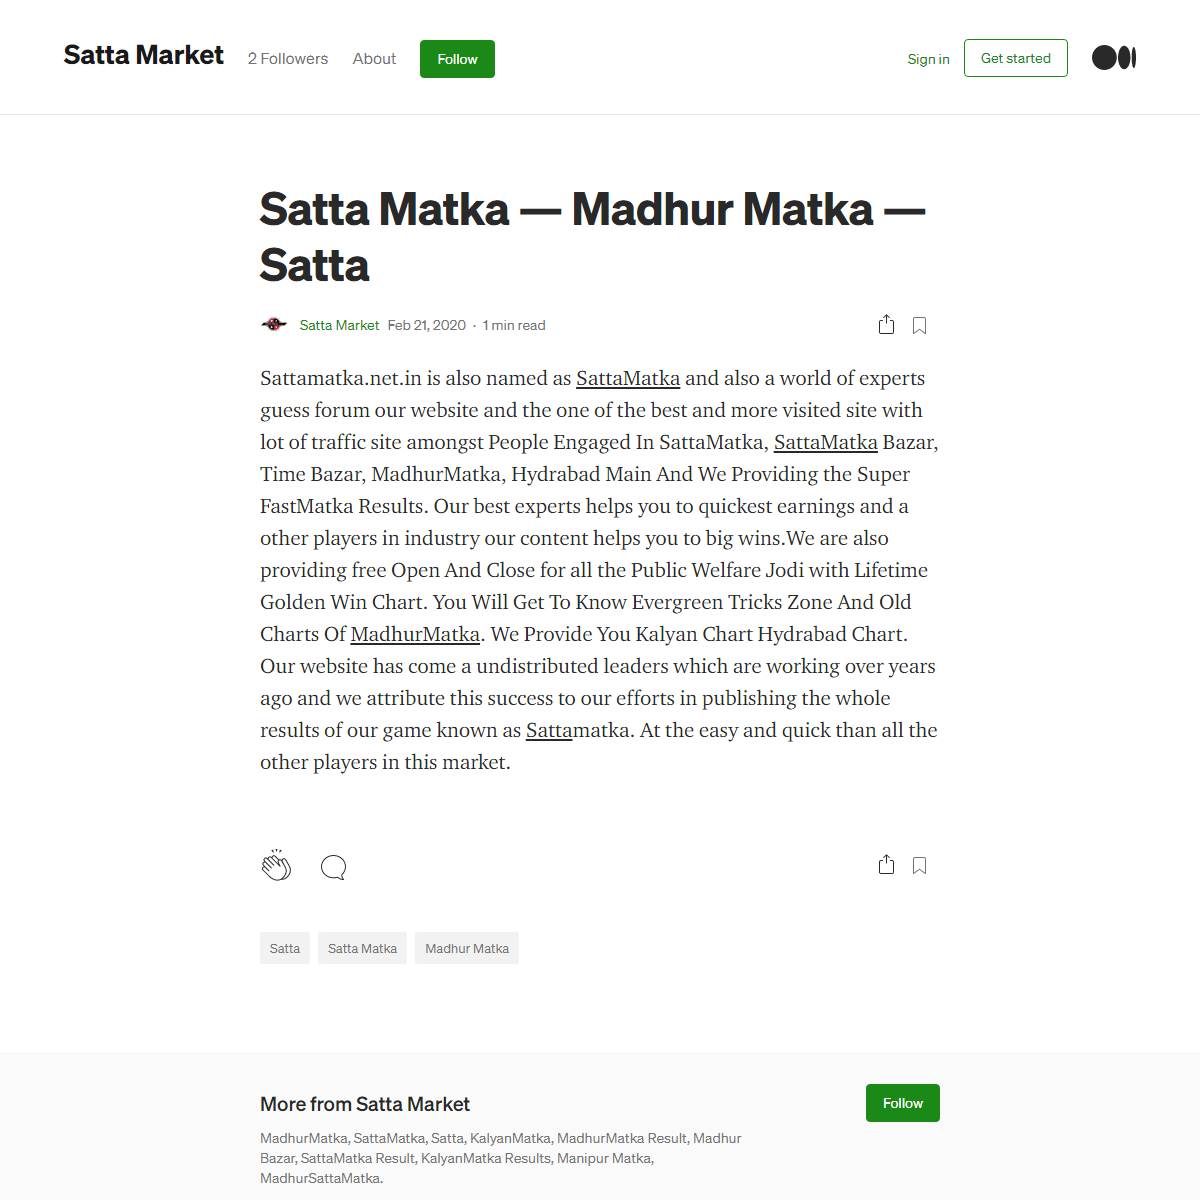 A complete backup of https://medium.com/@sattamatka1/satta-matka-madhur-matka-satta-f74f46761da4